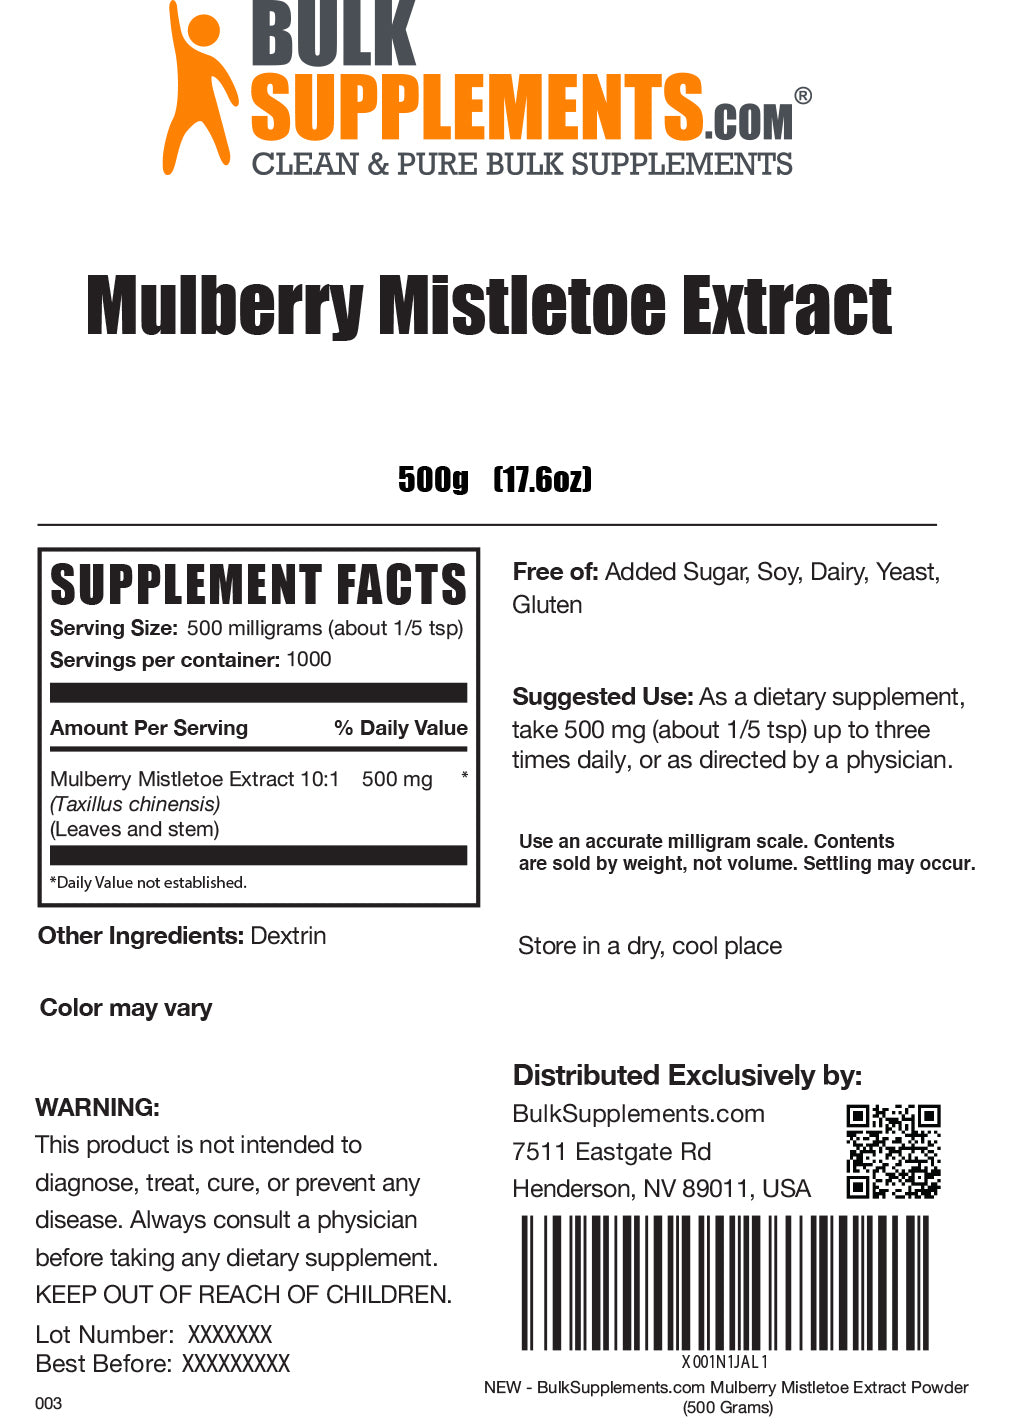 Mulberry Mistletoe Extract powder label 500g